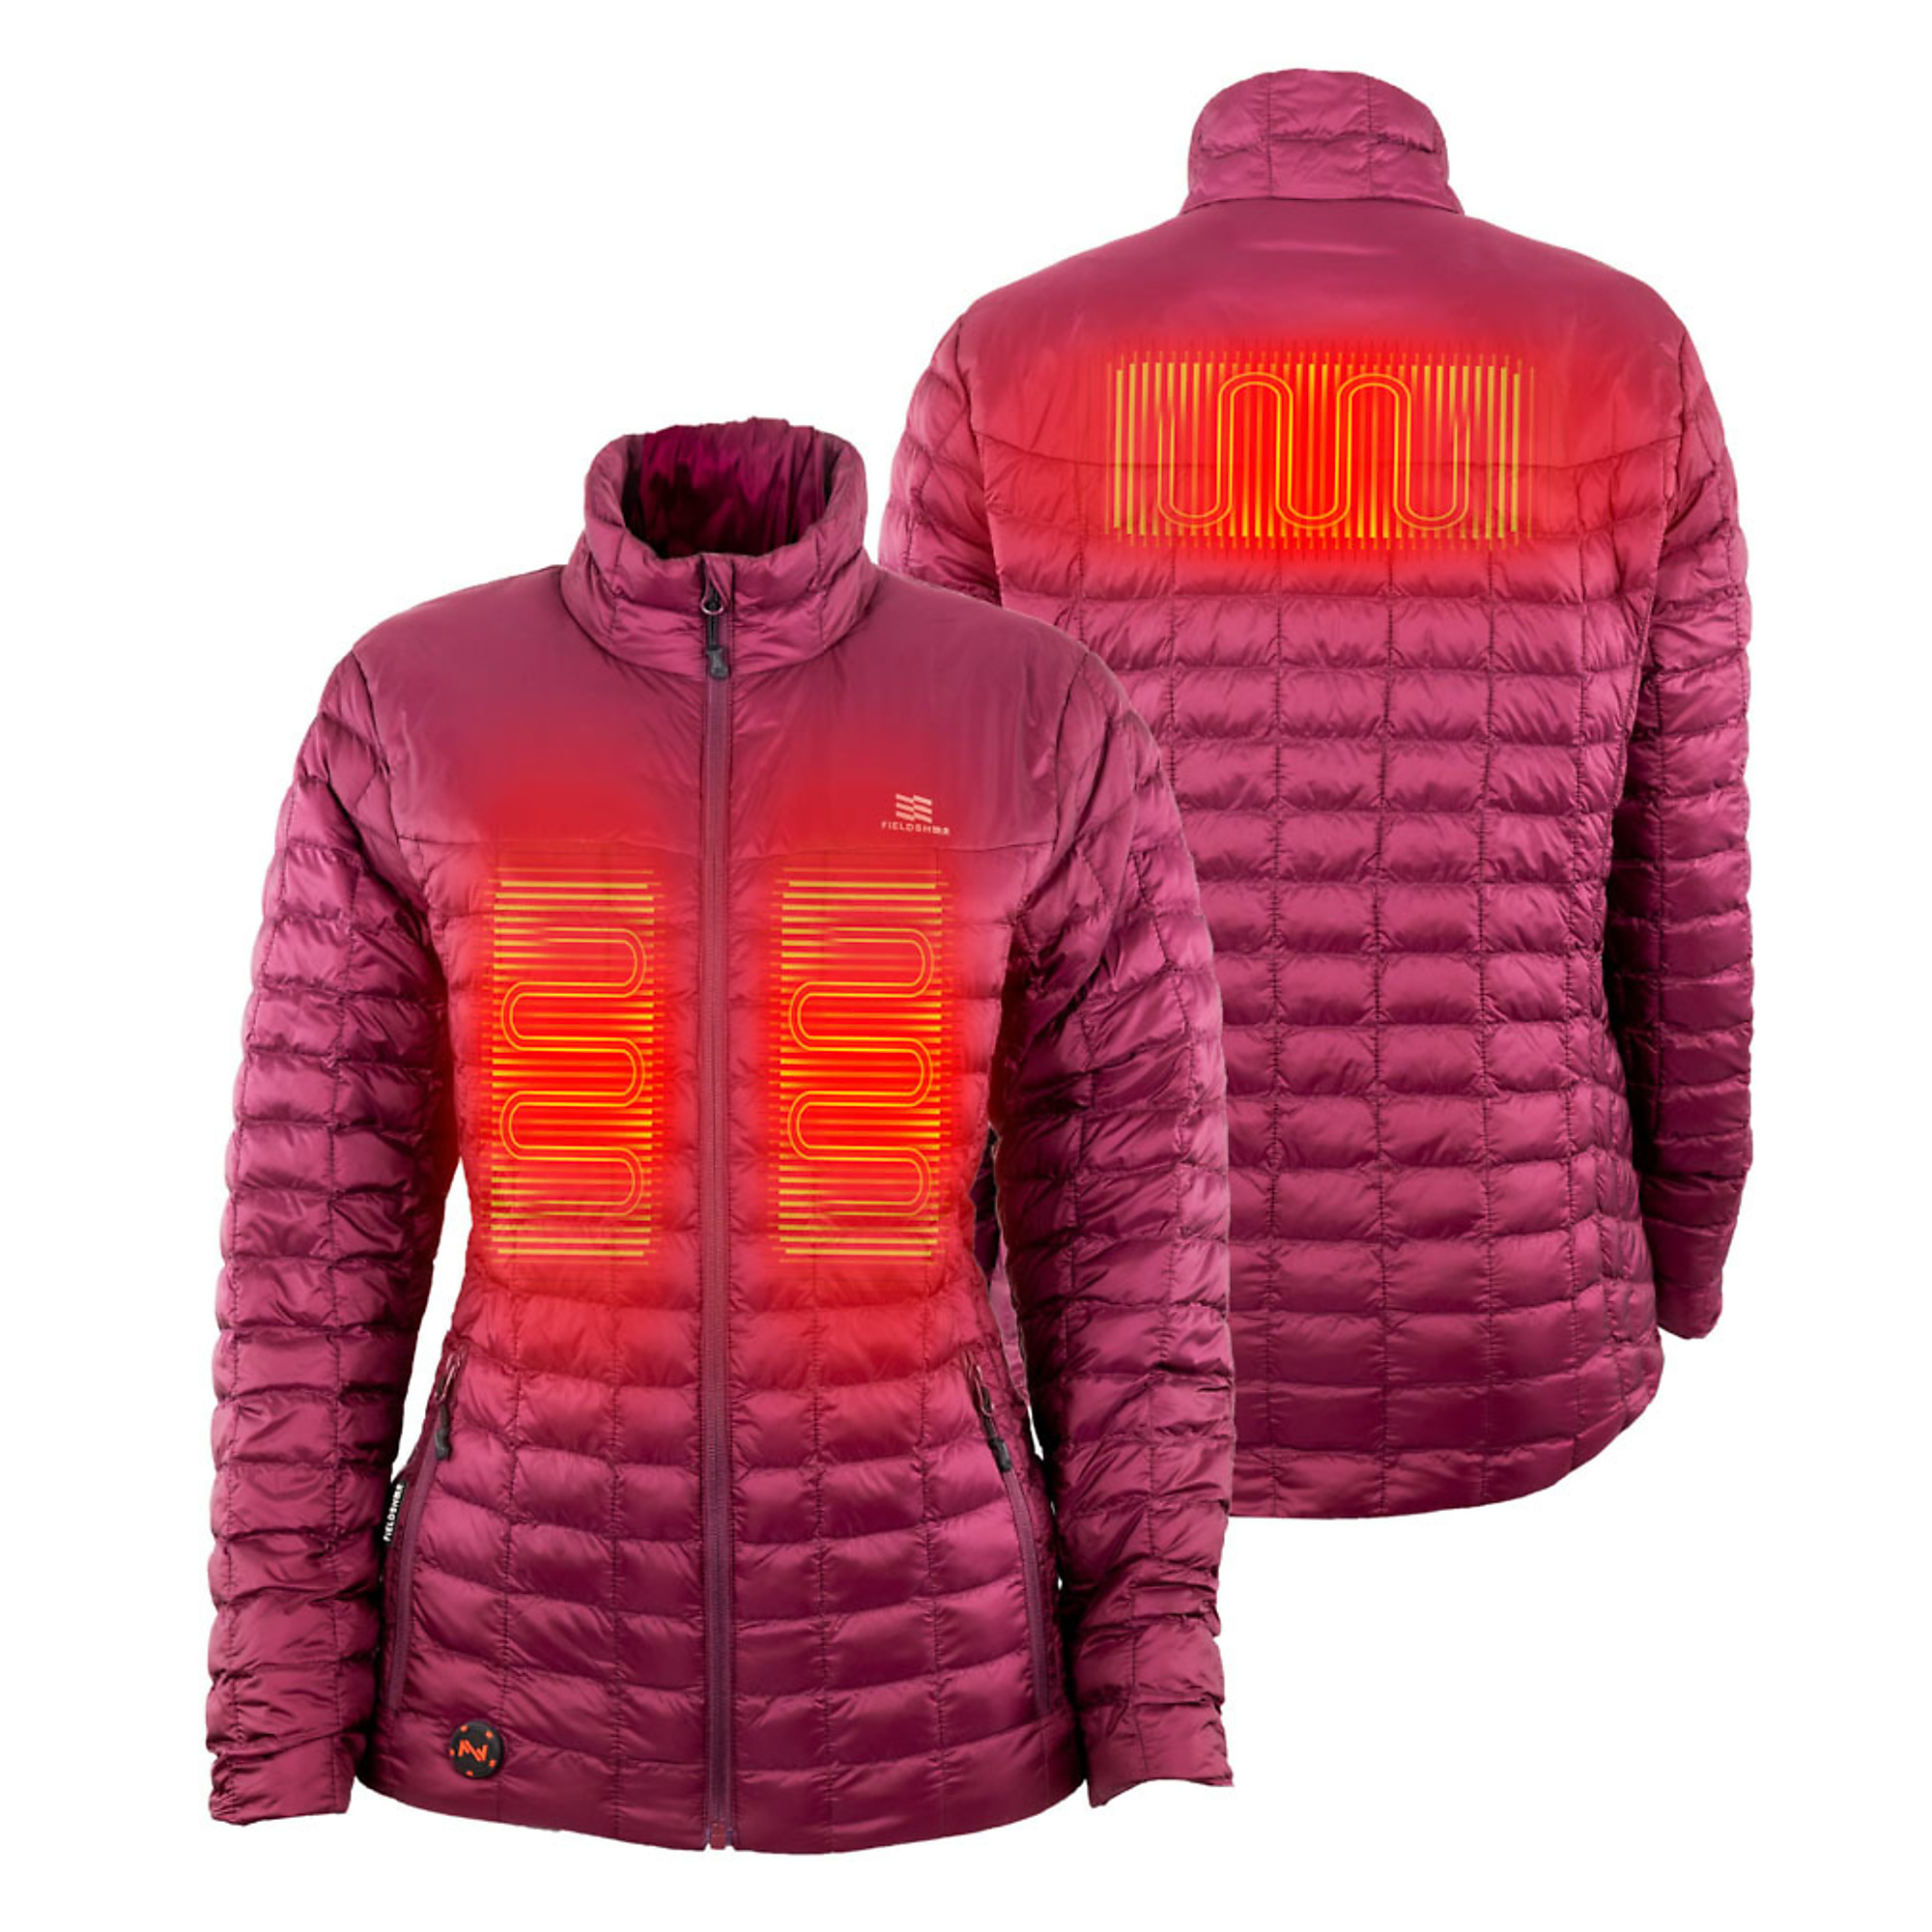 Fieldsheer, Women's 7.4v Backcountry Heated Jacket, Size XS, Color Red, Model MWWJ04310120